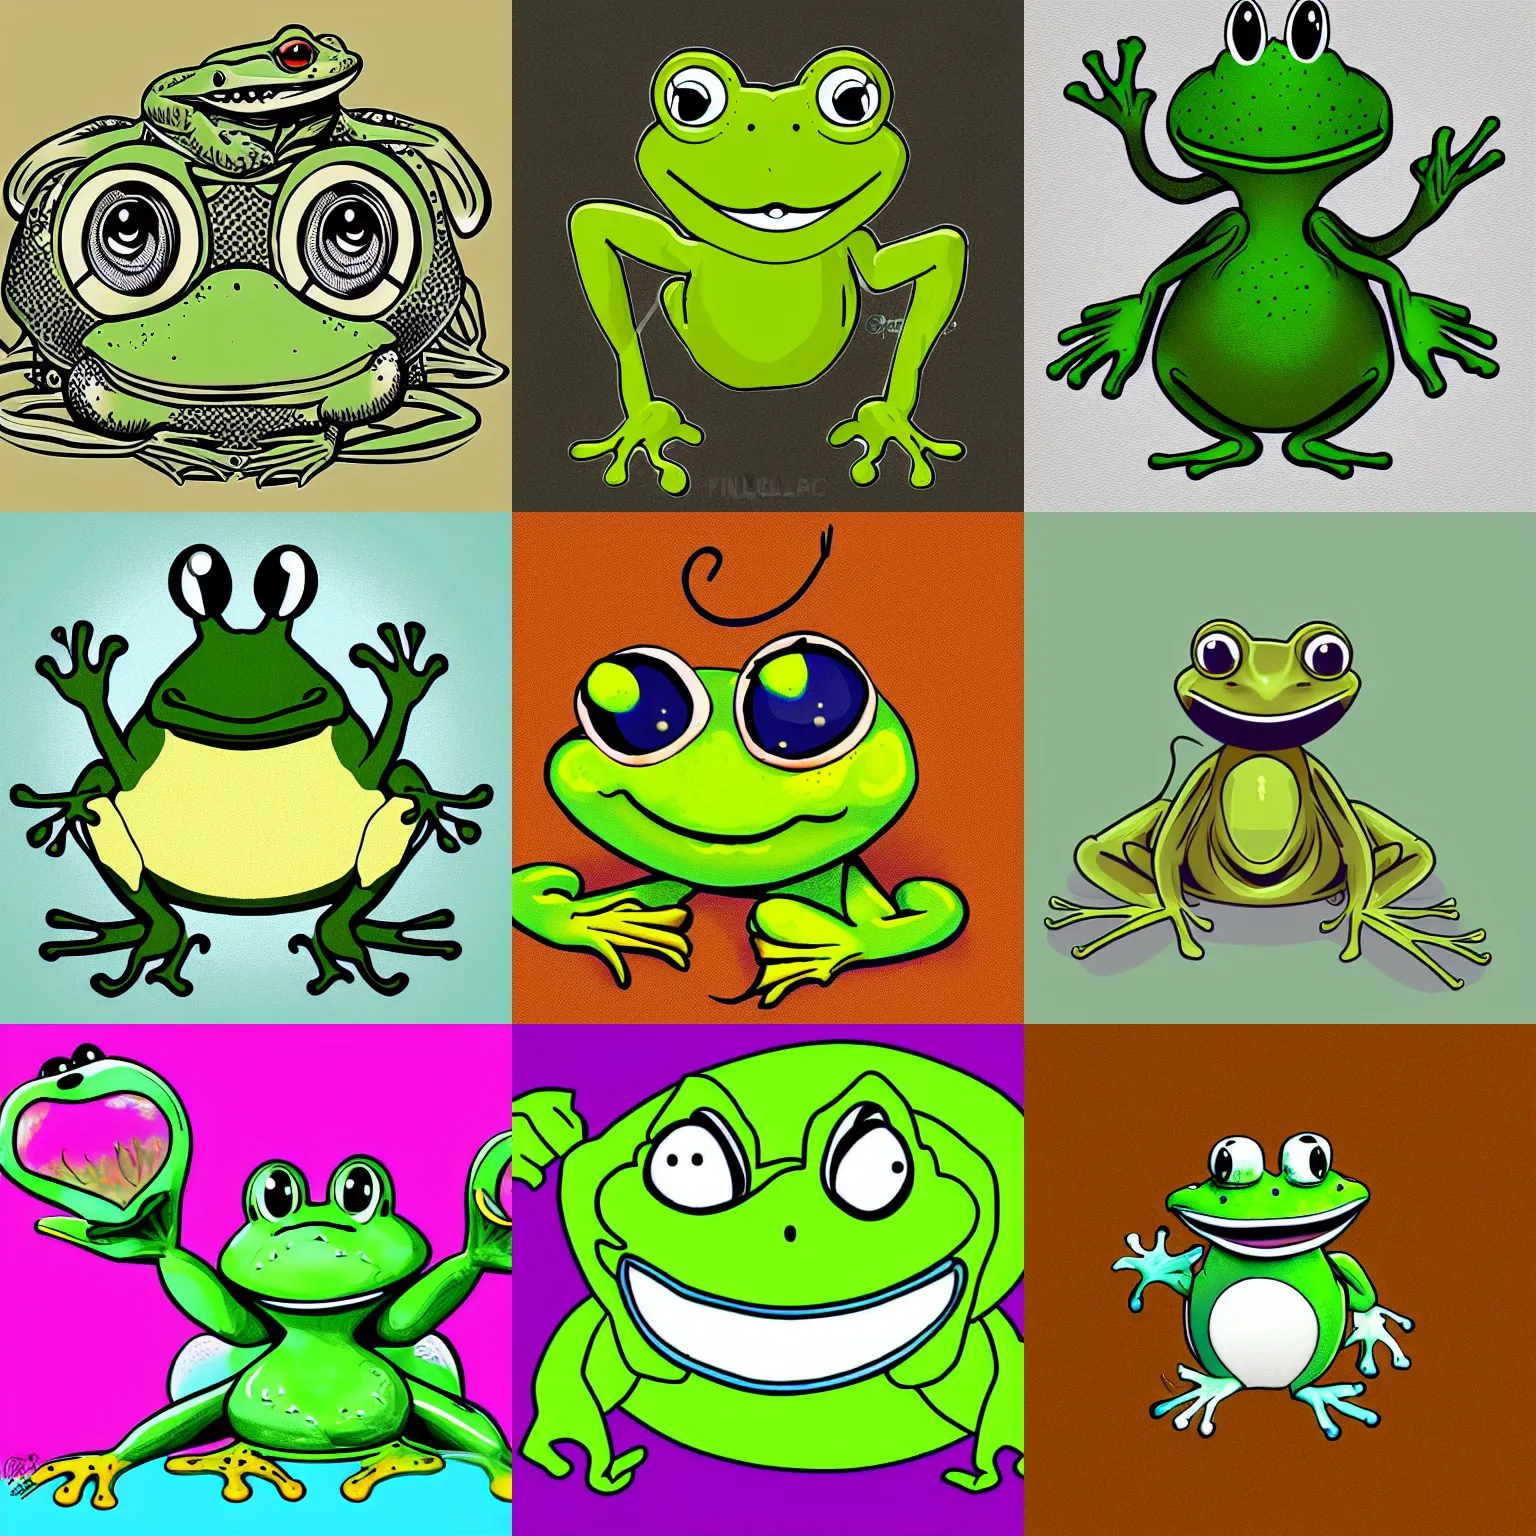 Prompt: Anthropomorphic frog, digital art, illustration, Rubber Hose style